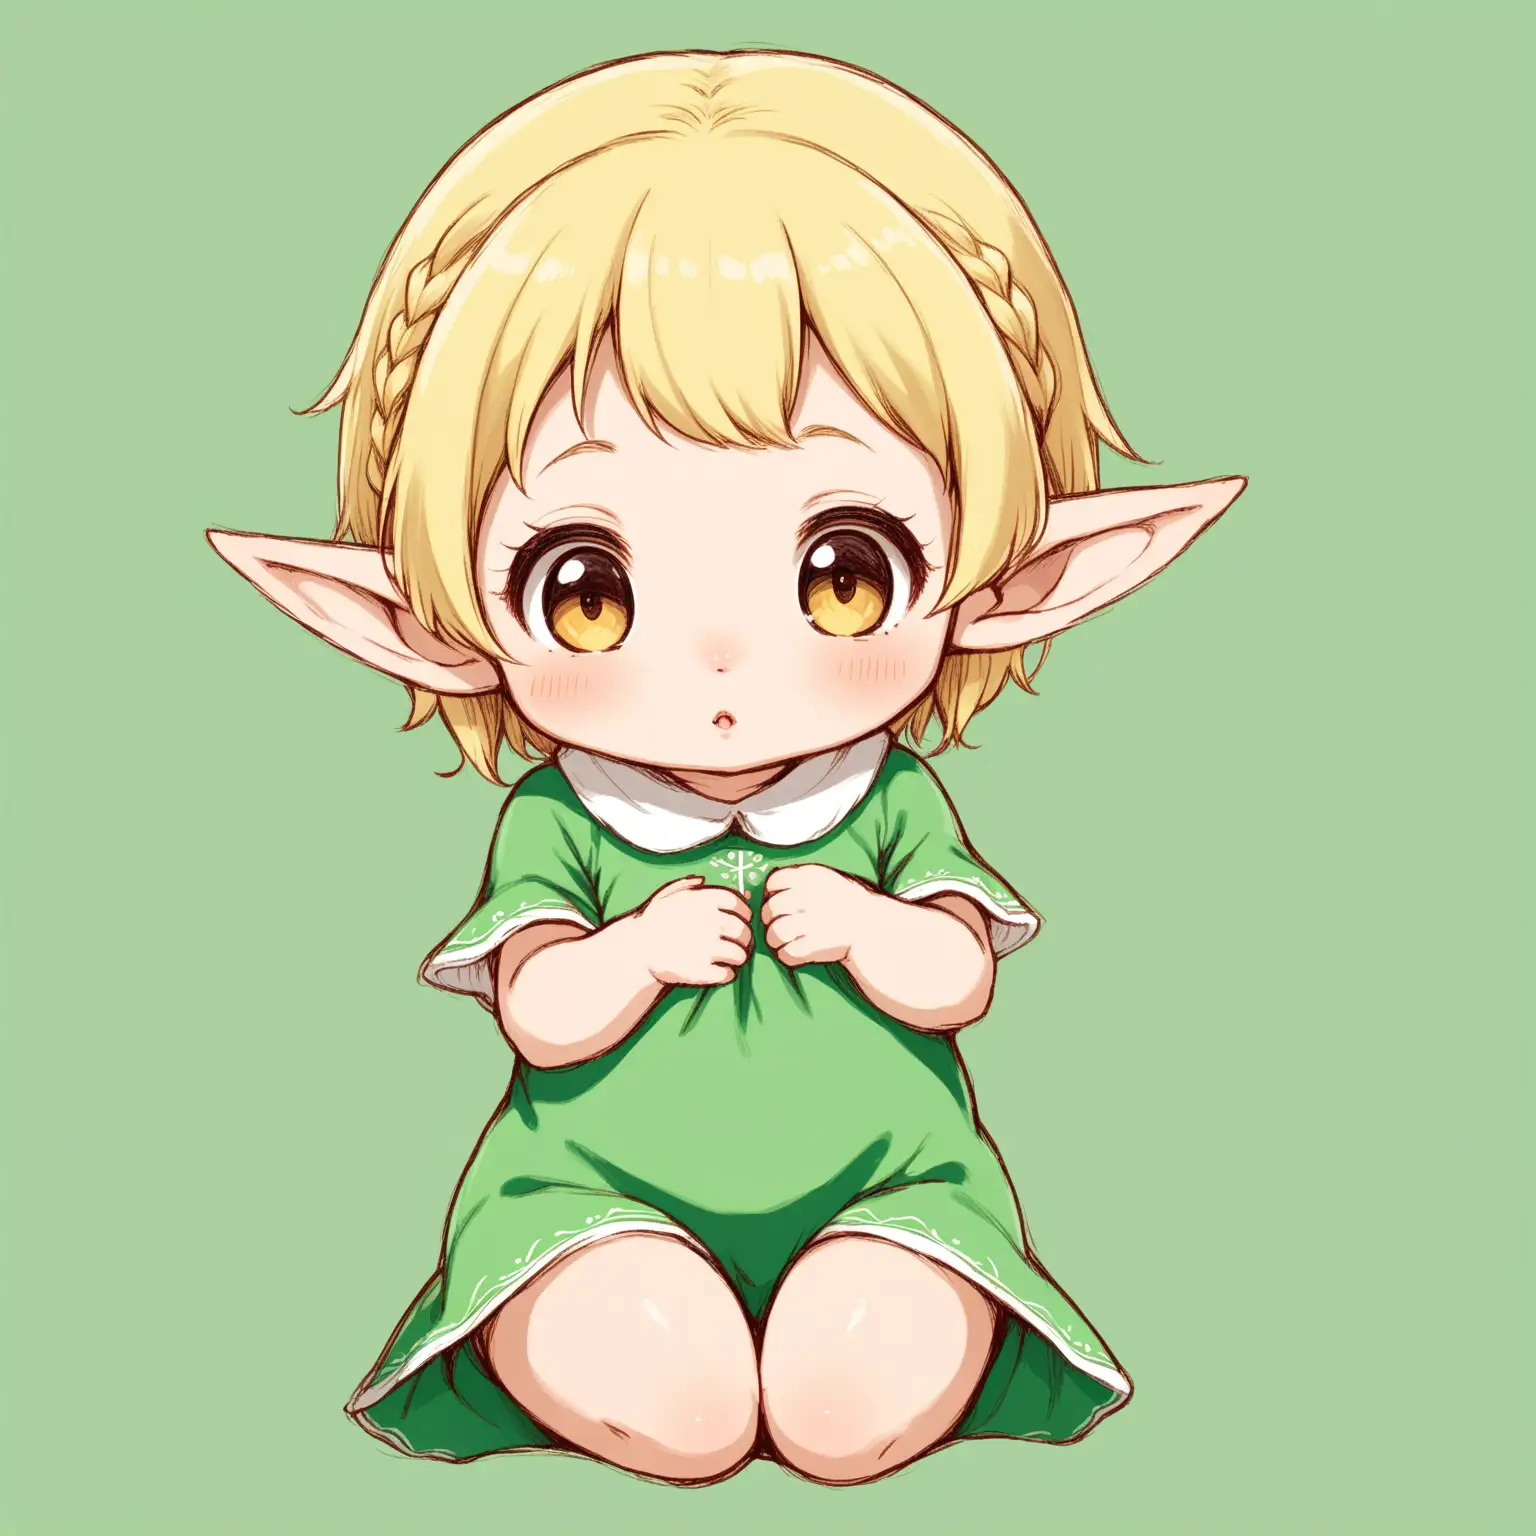 a female elf baby. Ghibli style. no background